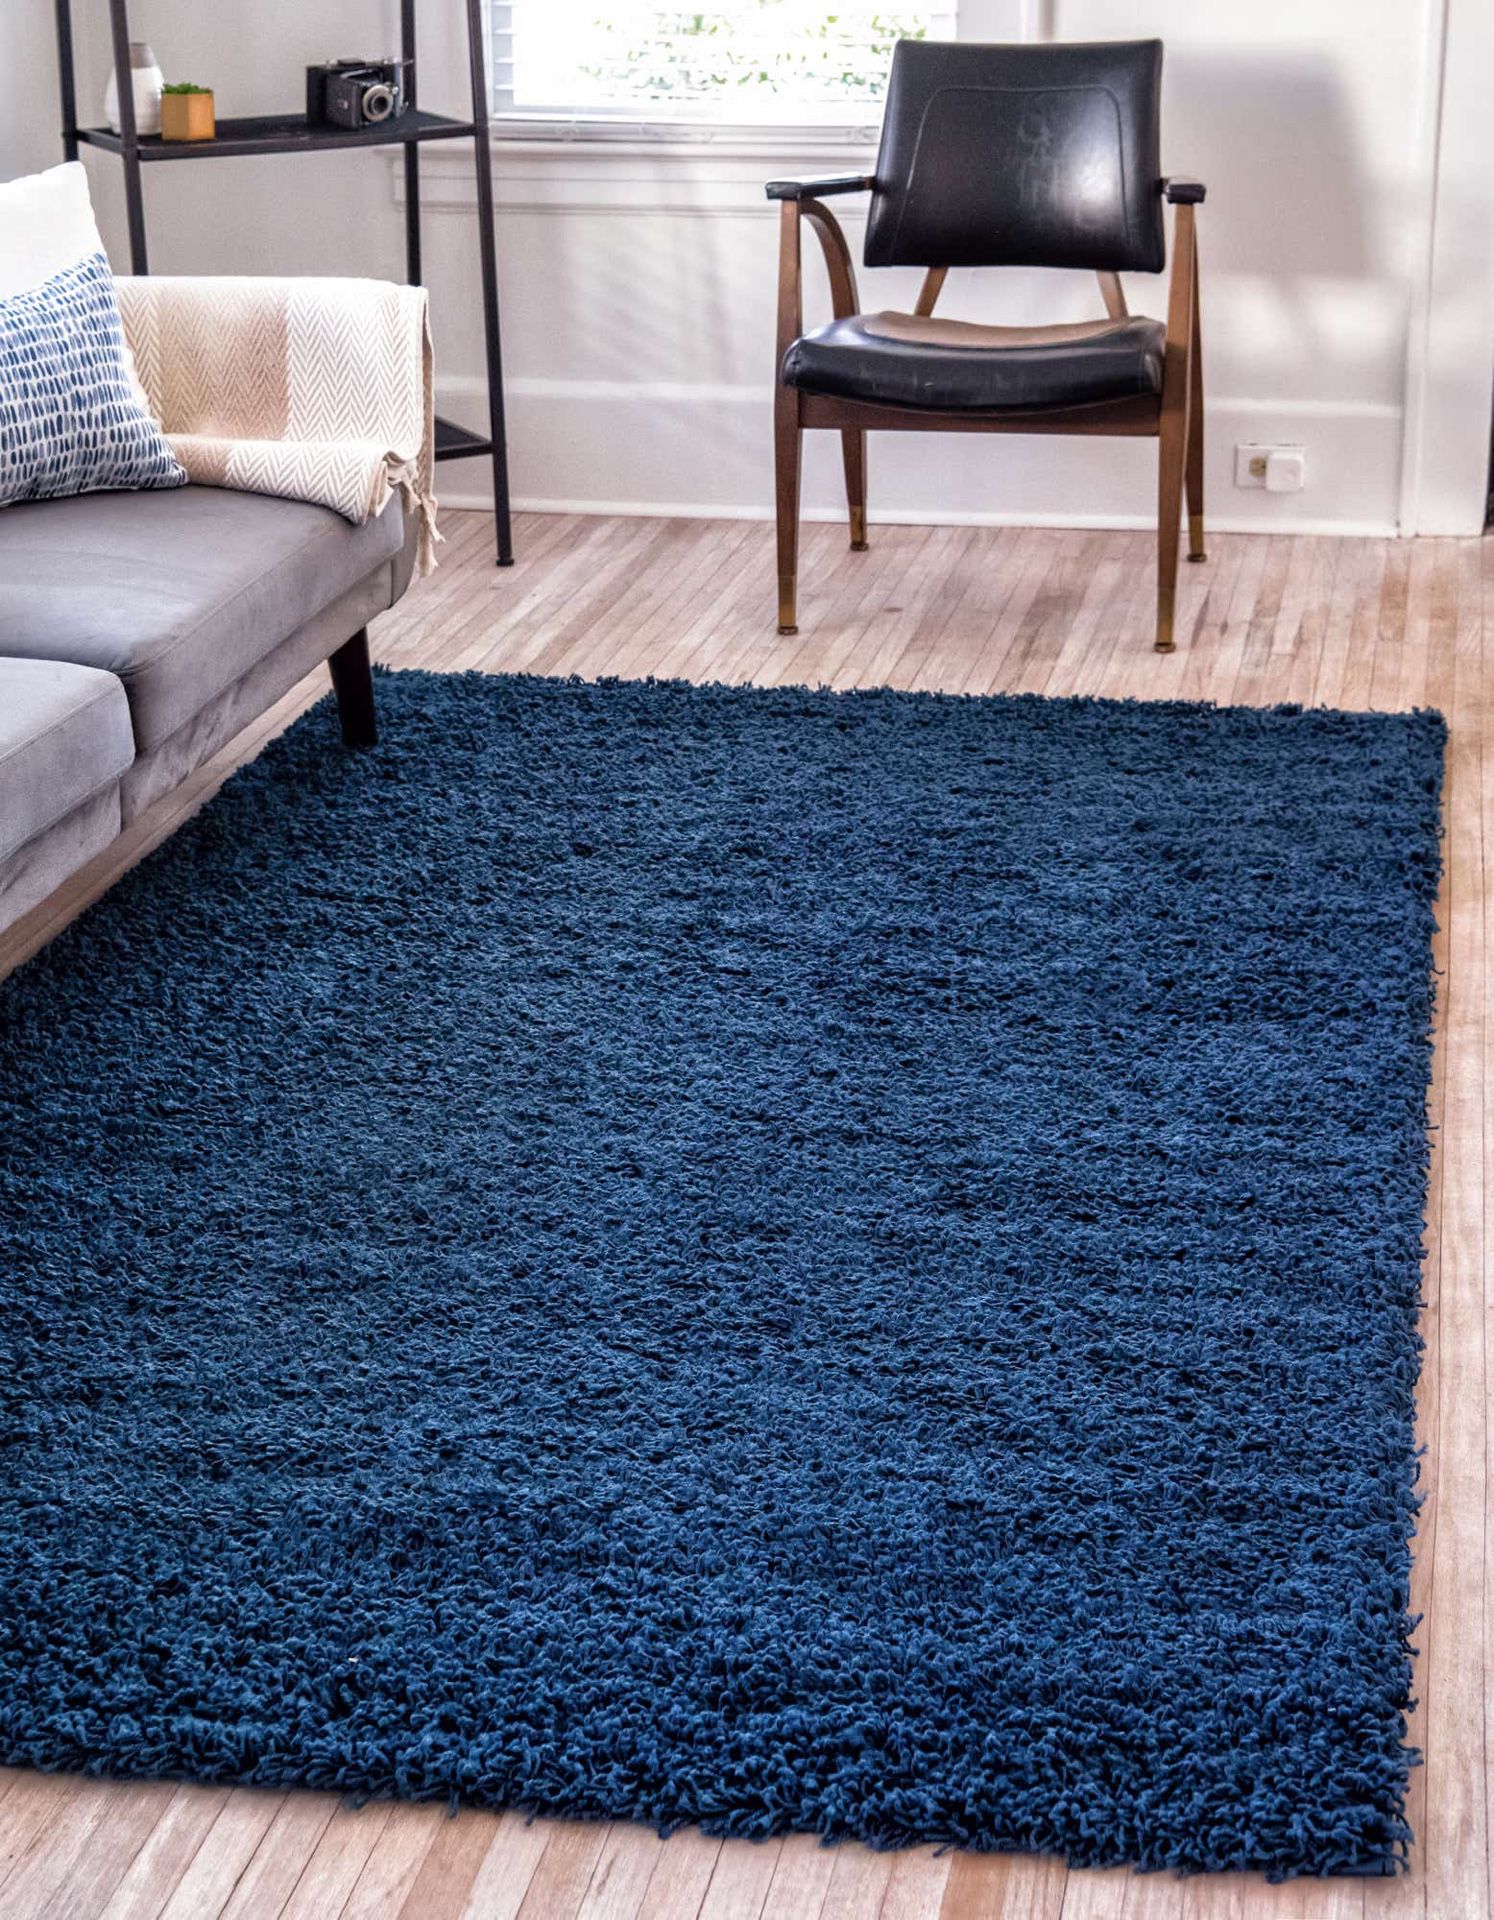 New shaggy rug size 5x8 nice blue shags carpet